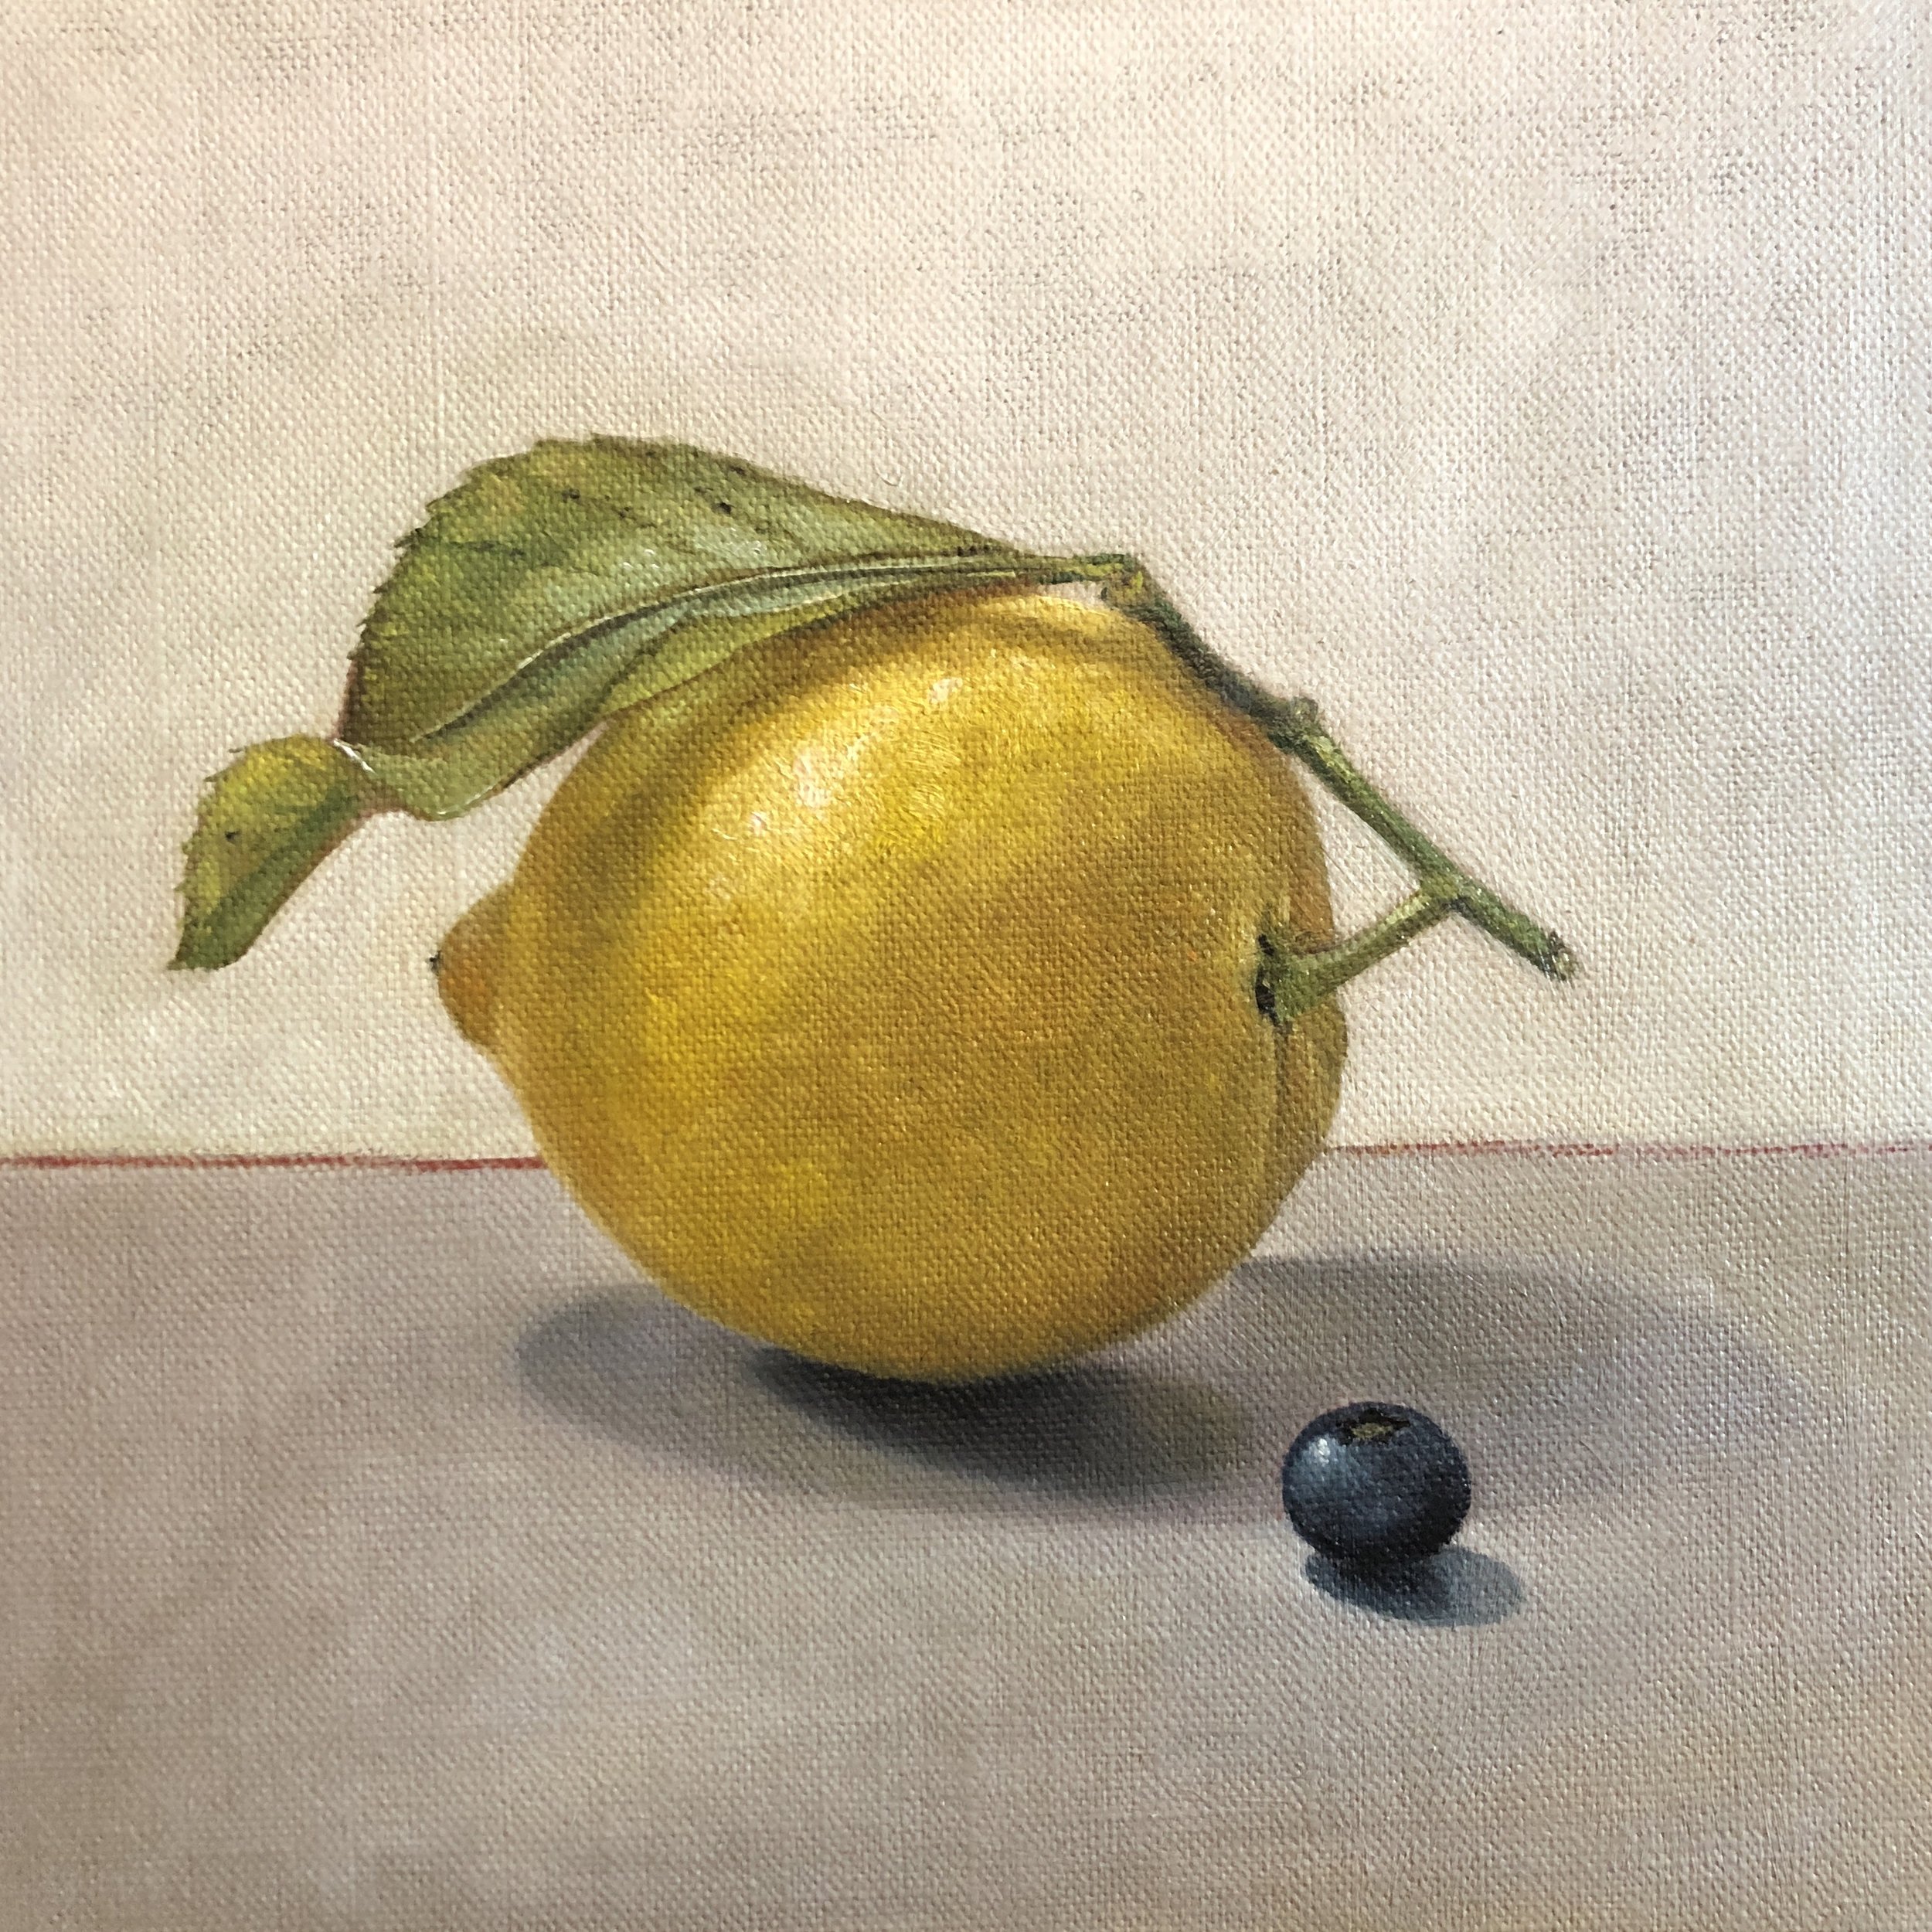 Lemon with blueberry